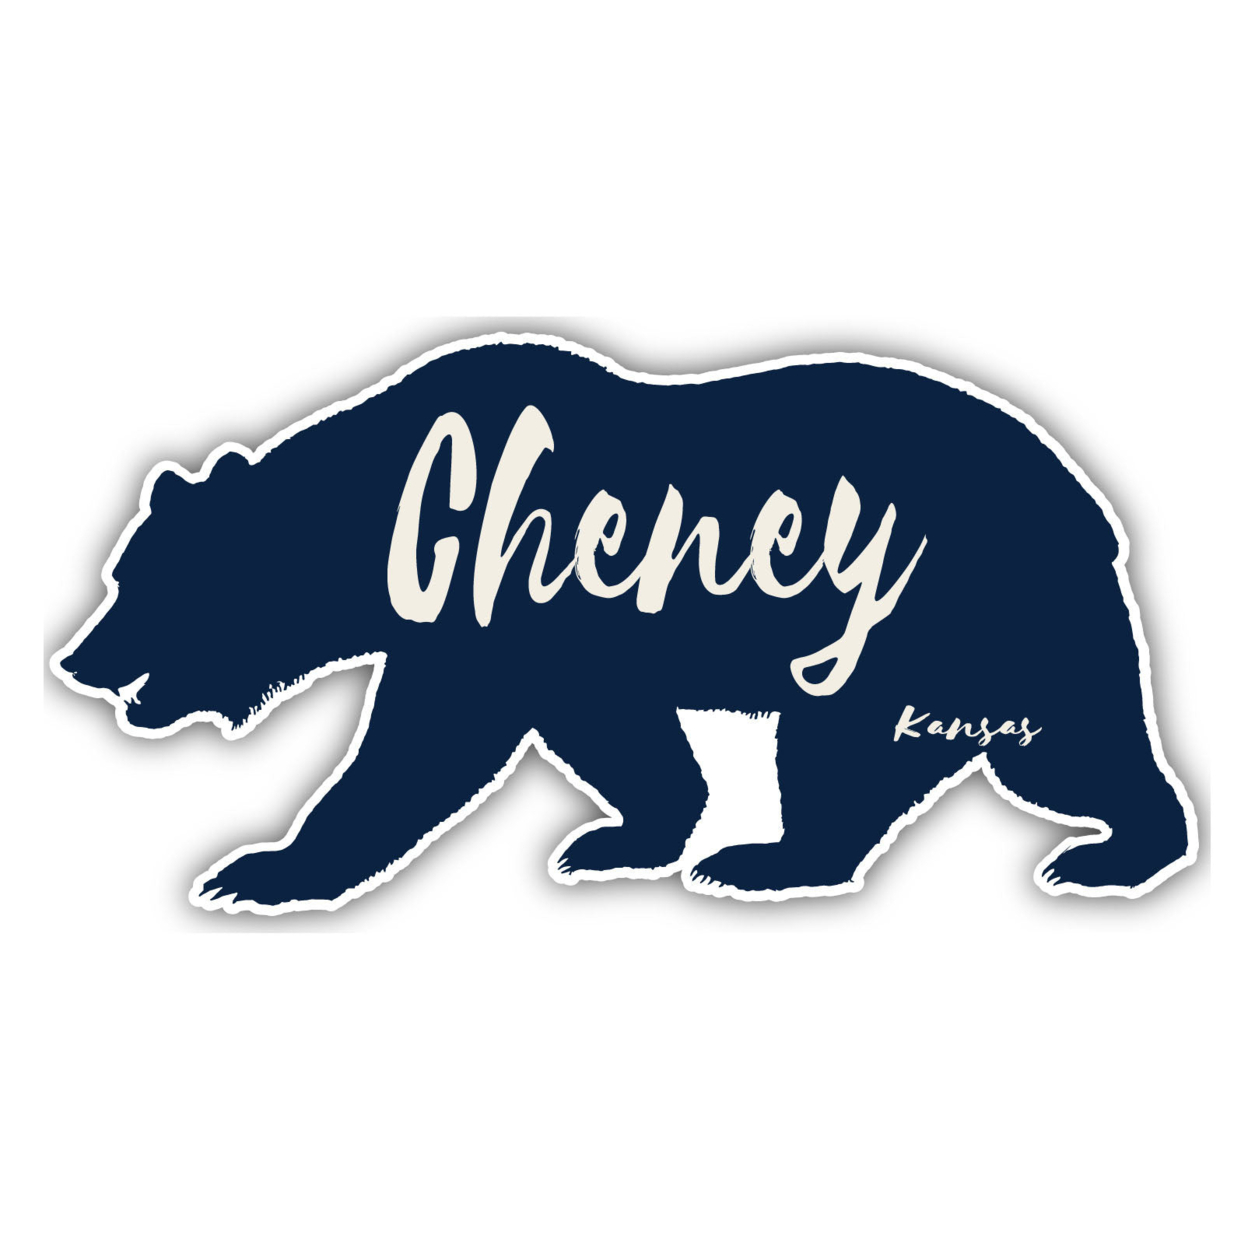 Cheney Kansas Souvenir Decorative Stickers (Choose Theme And Size) - Single Unit, 12-Inch, Bear